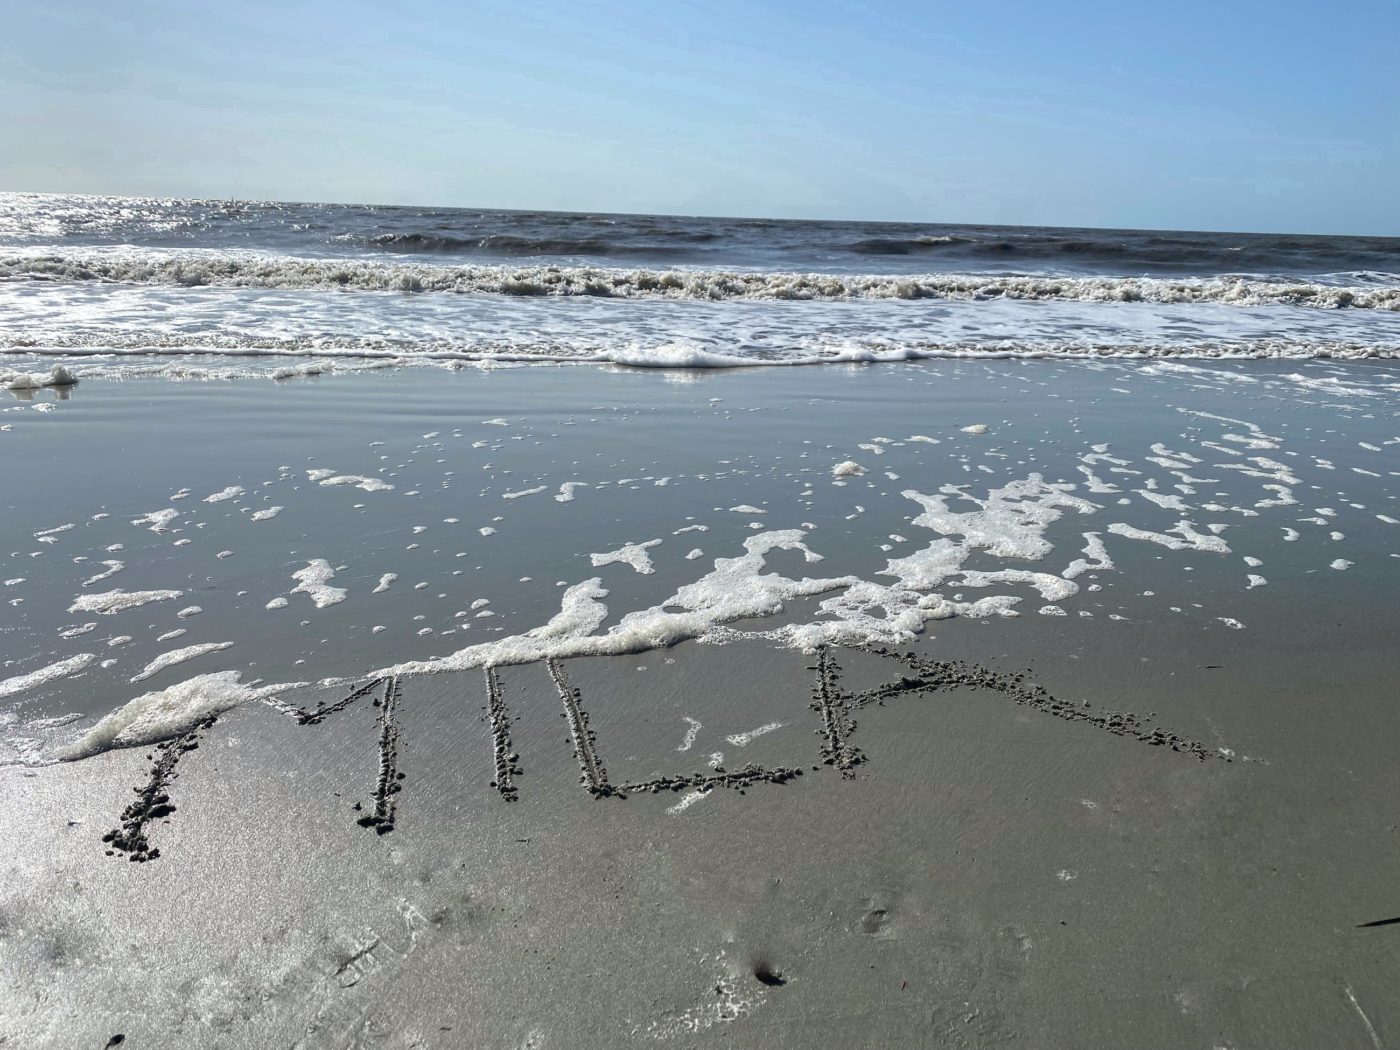 "Mila" written in wet sand at the beach